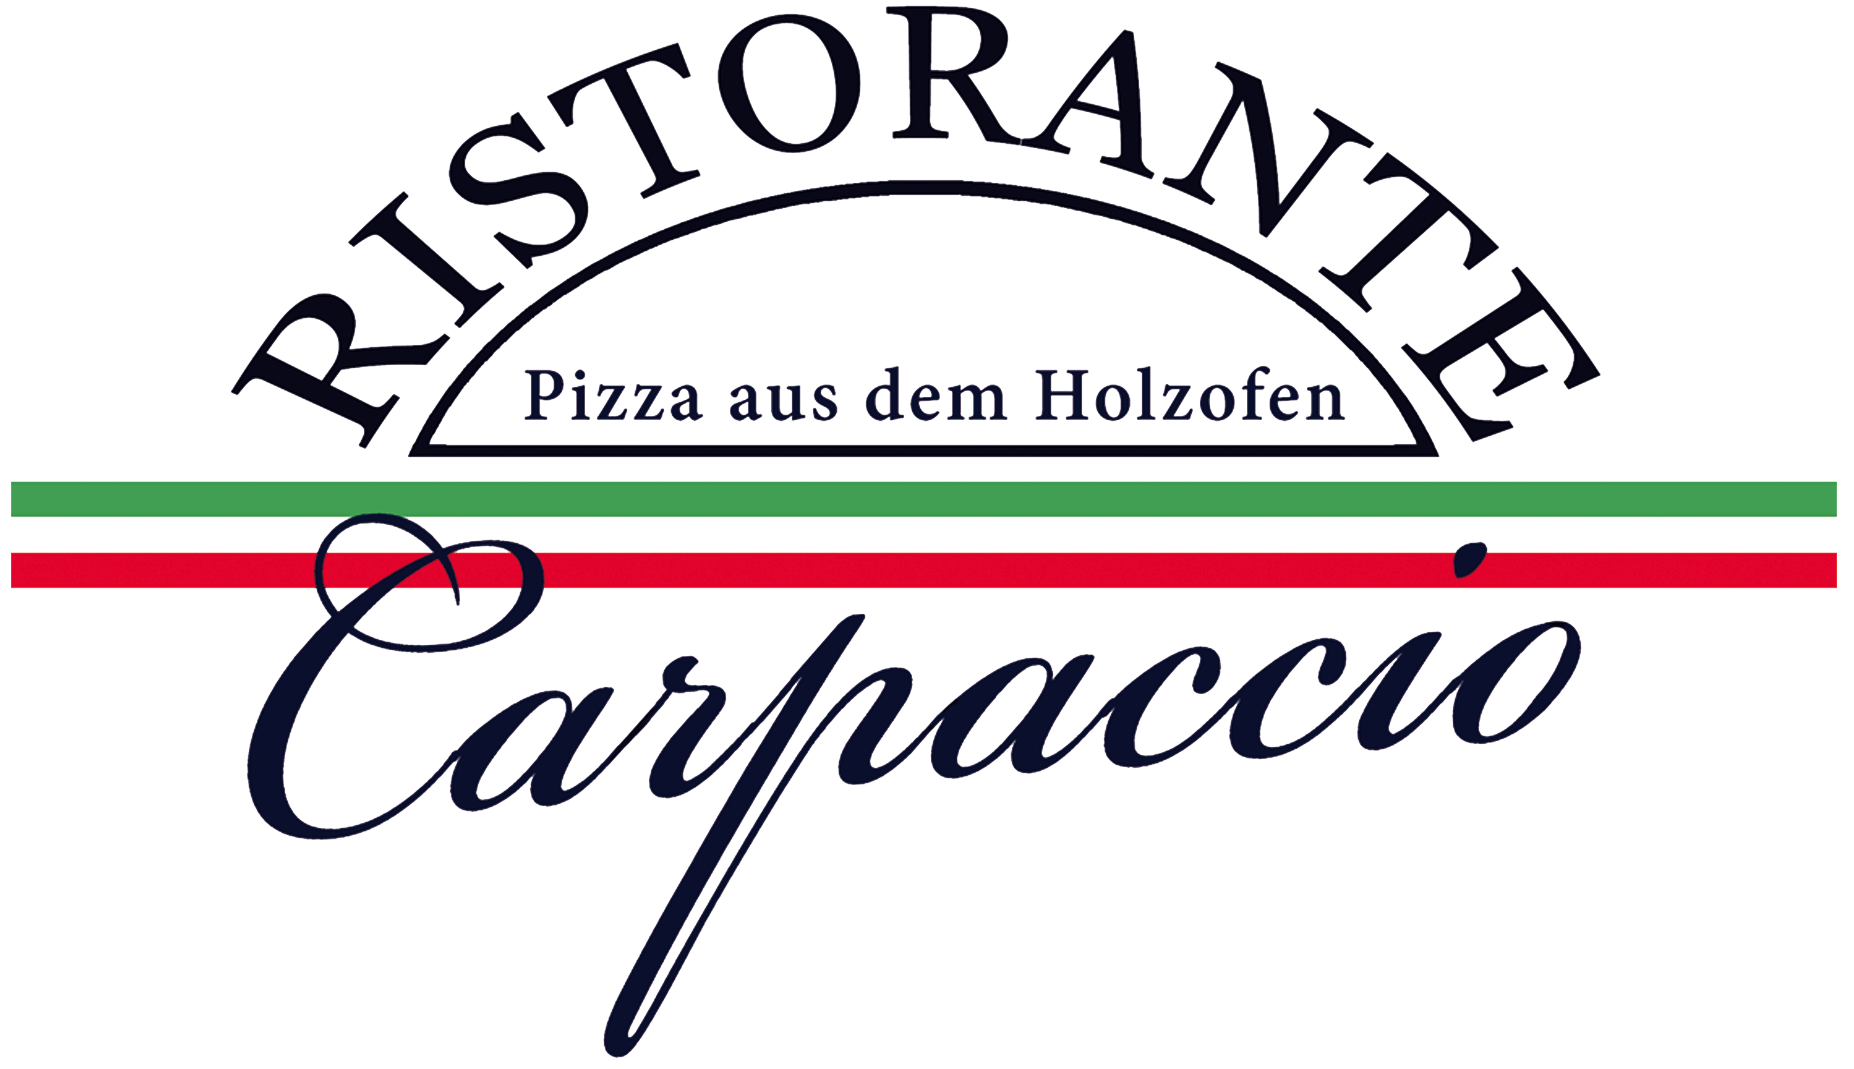 Pizzeria mit Holzofen Live - Ristorante Carpaccio Erlangen